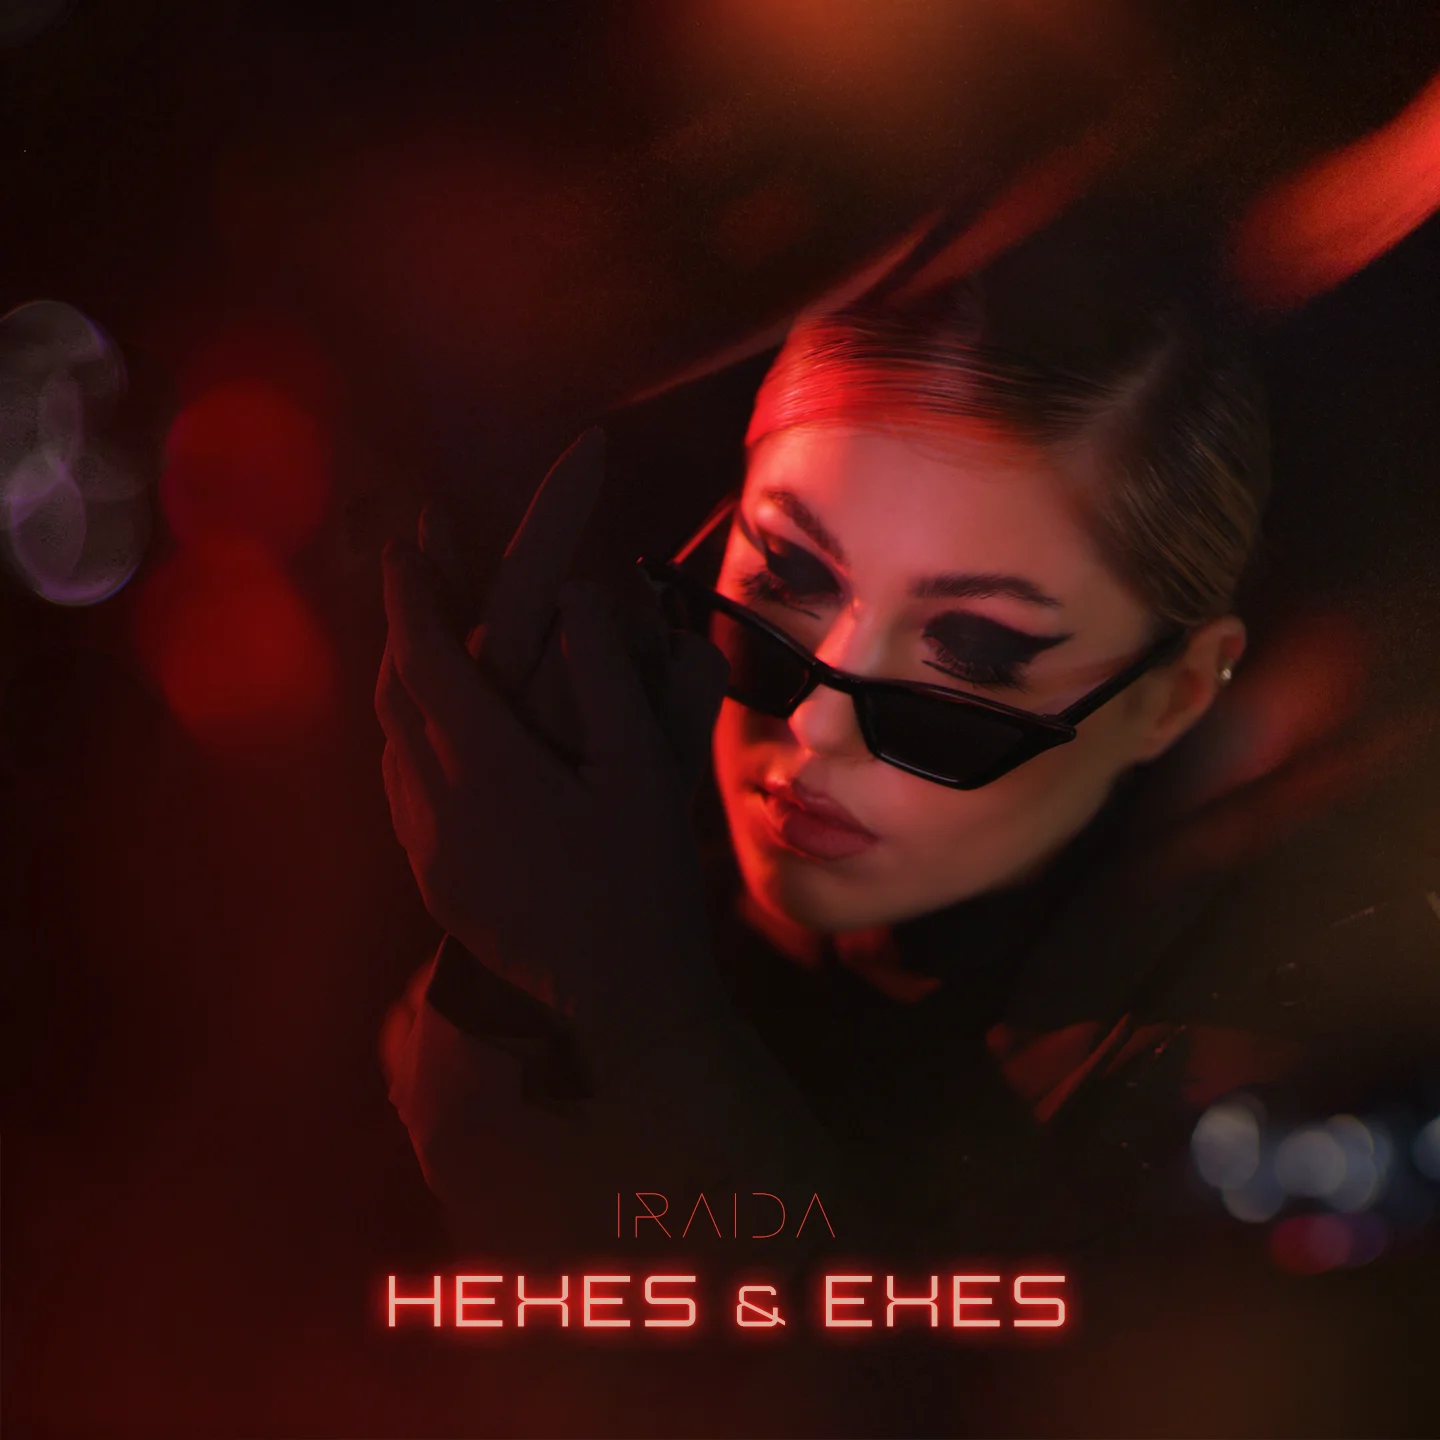 iraida single – Hexes & Exes în cadrul The Session